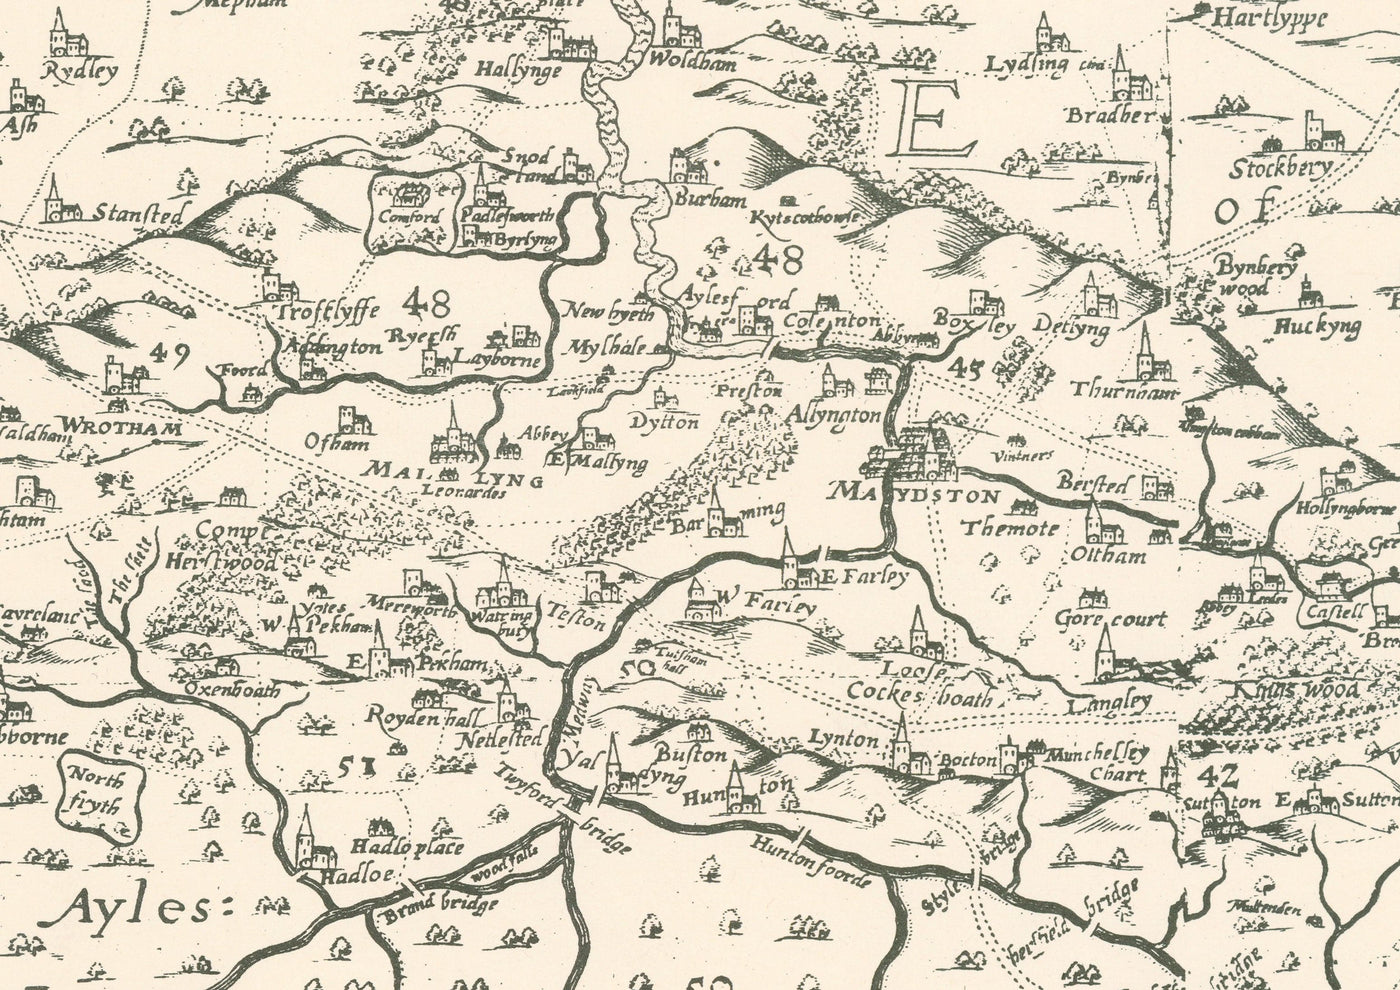 Old map of Kent in 1596 by Philip Symonson - Dartford, Maidstone, Bromley, Tunbridge, Gillingham, Chatham